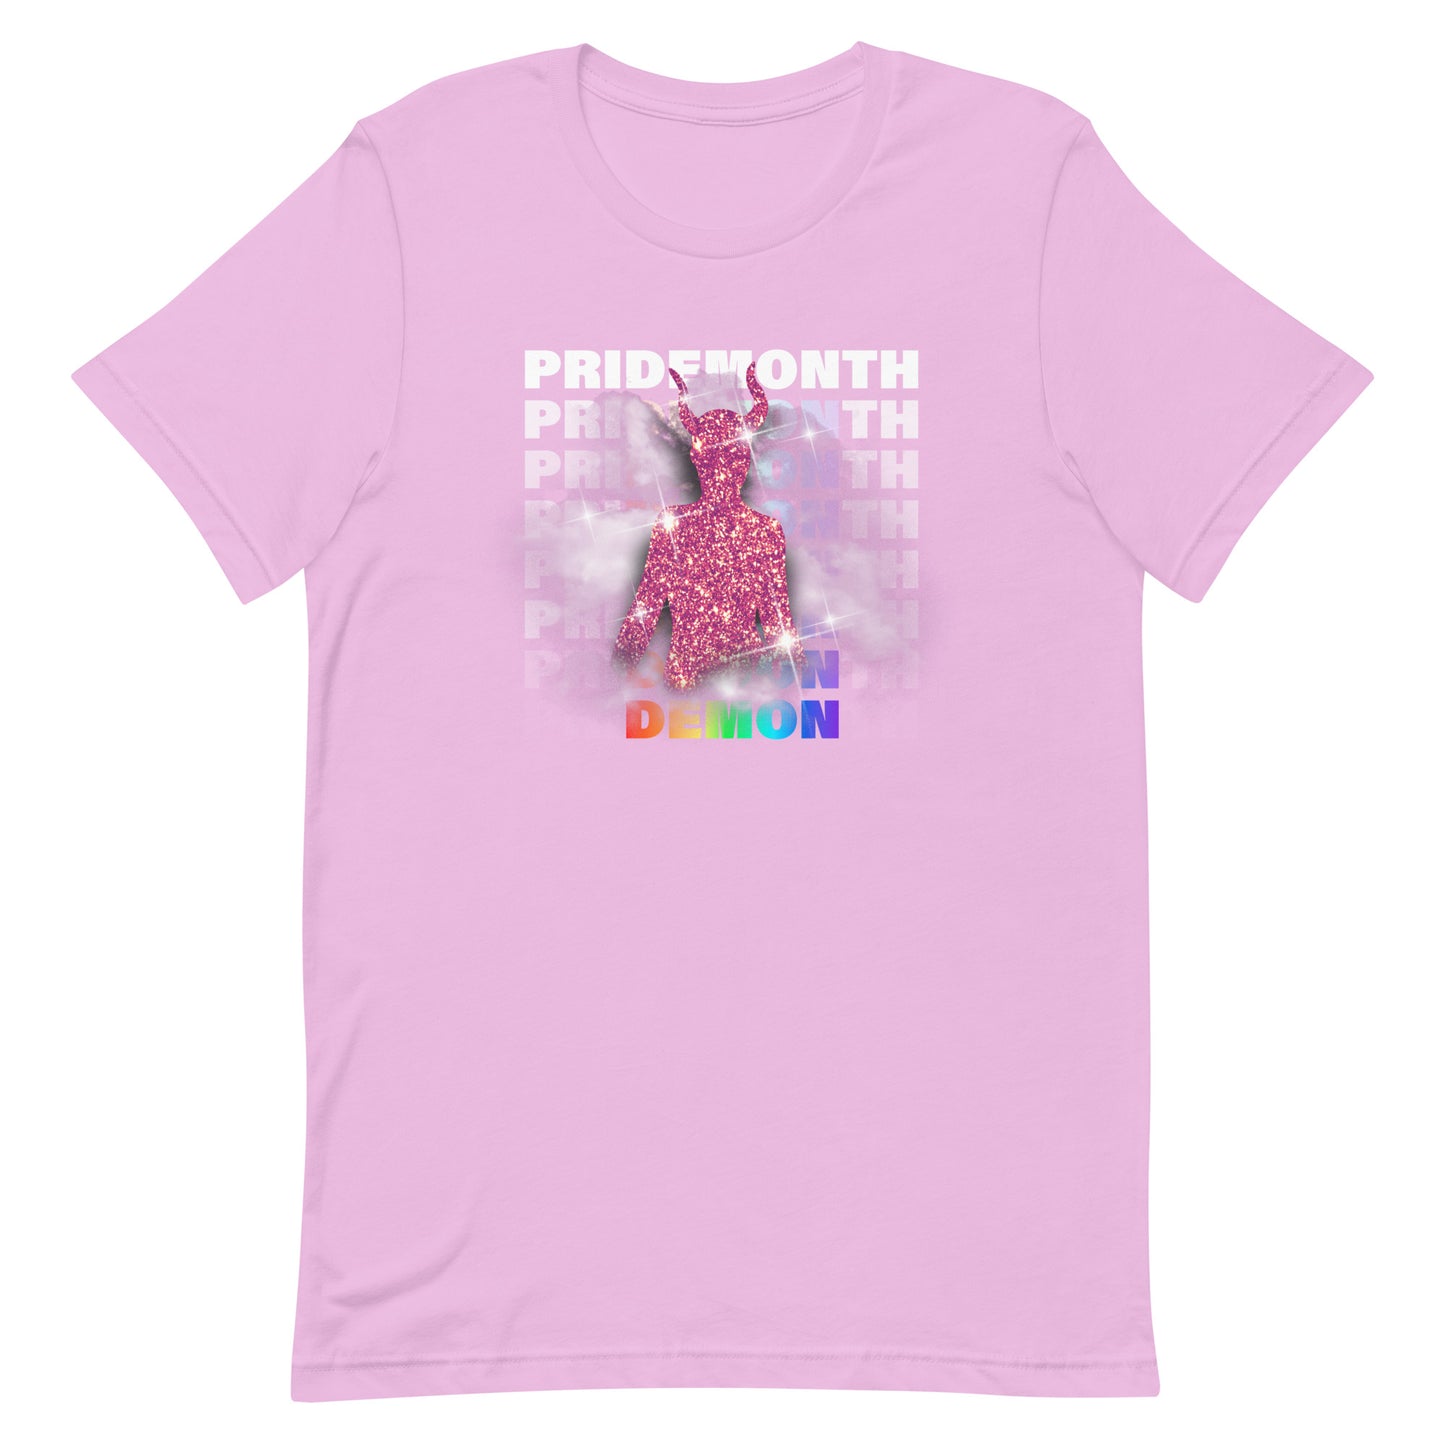 PRIDEMONTH (DEMON) Unisex t-shirt